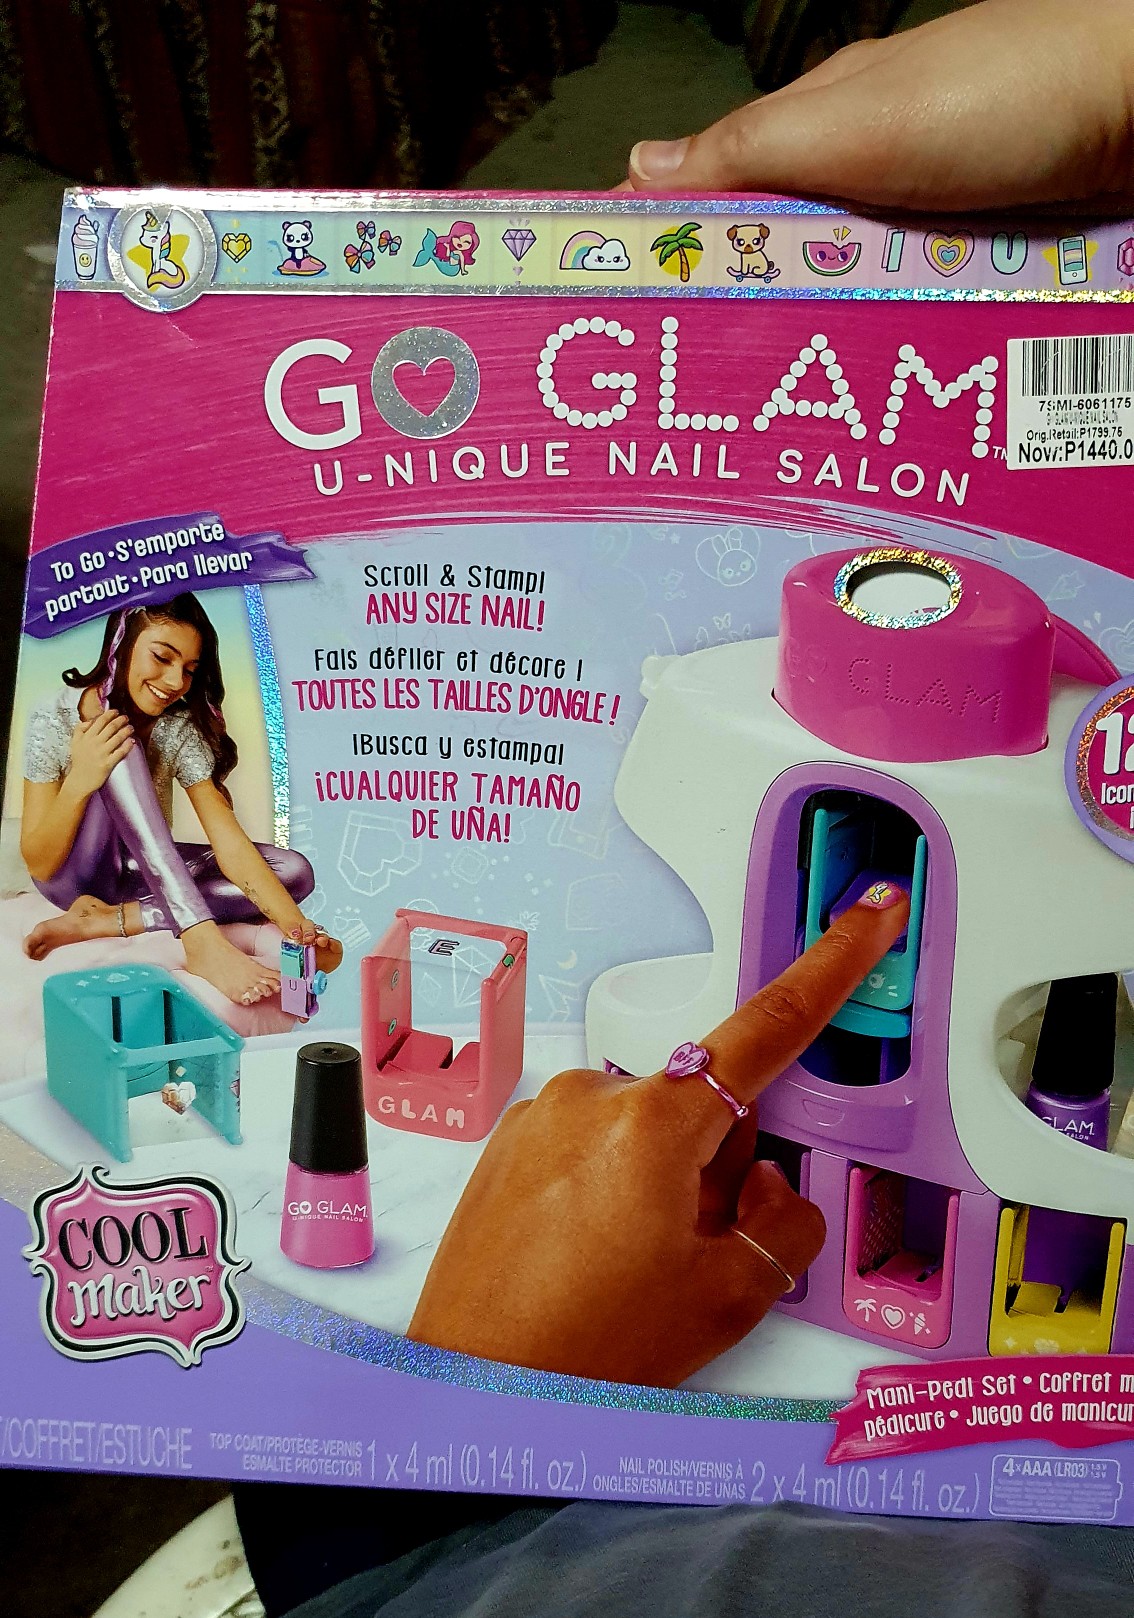 Go Glam Unique Salon